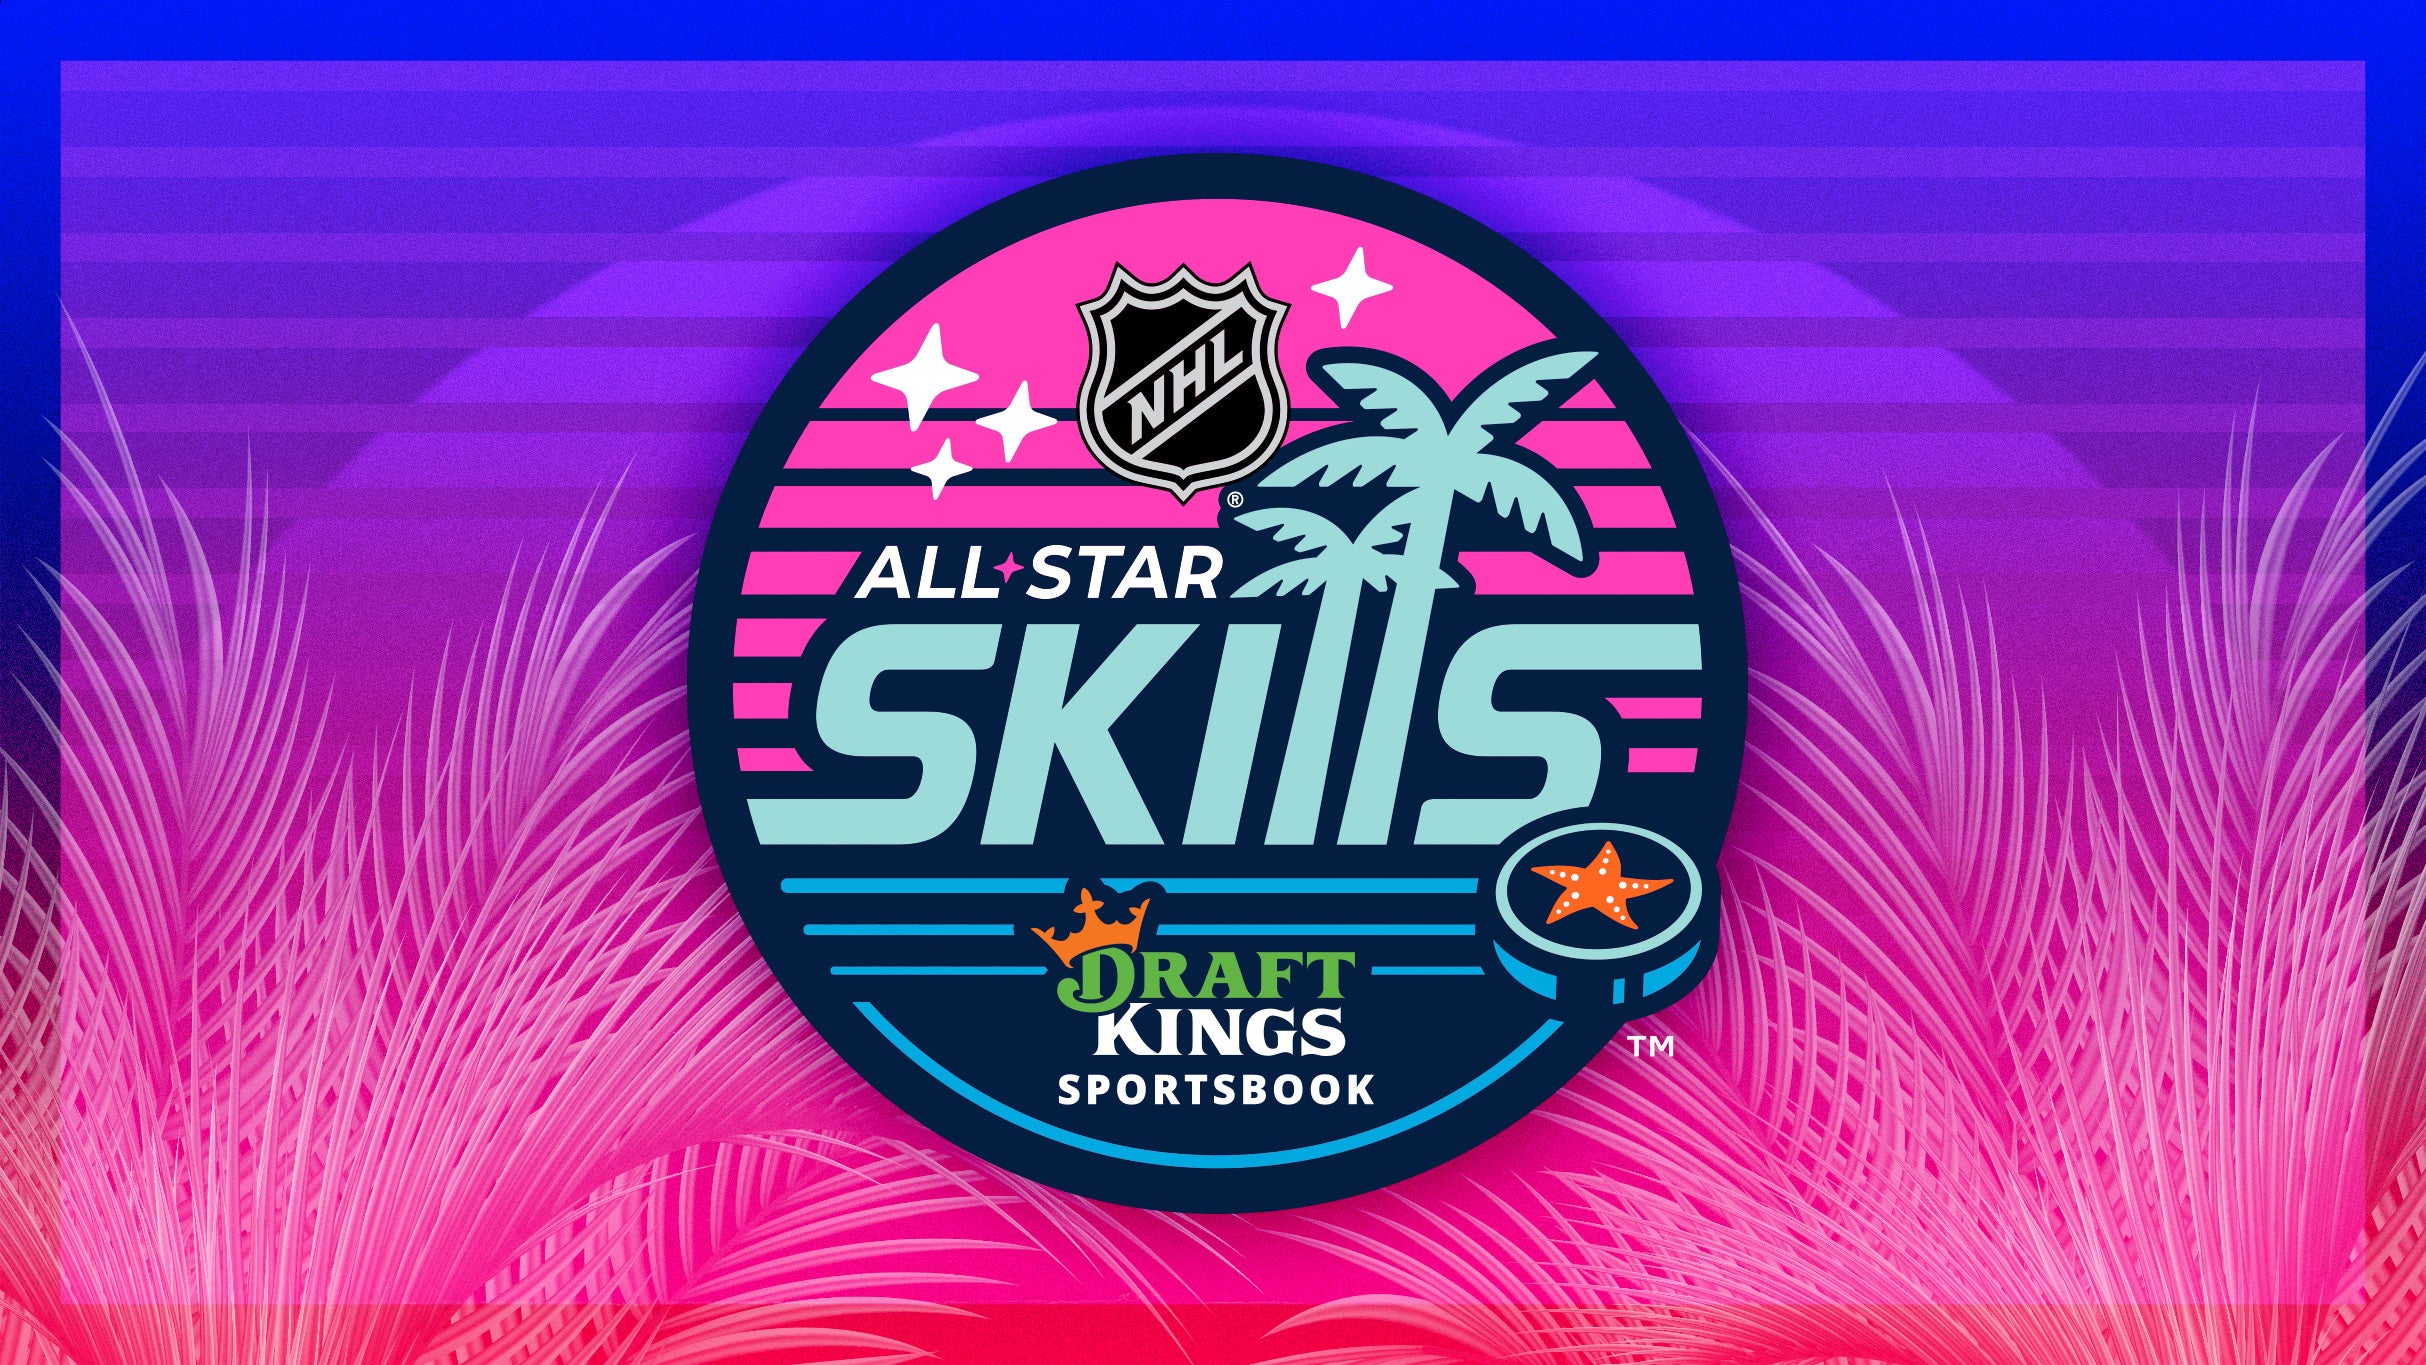 NHL All-Star Skills presale information on freepresalepasswords.com